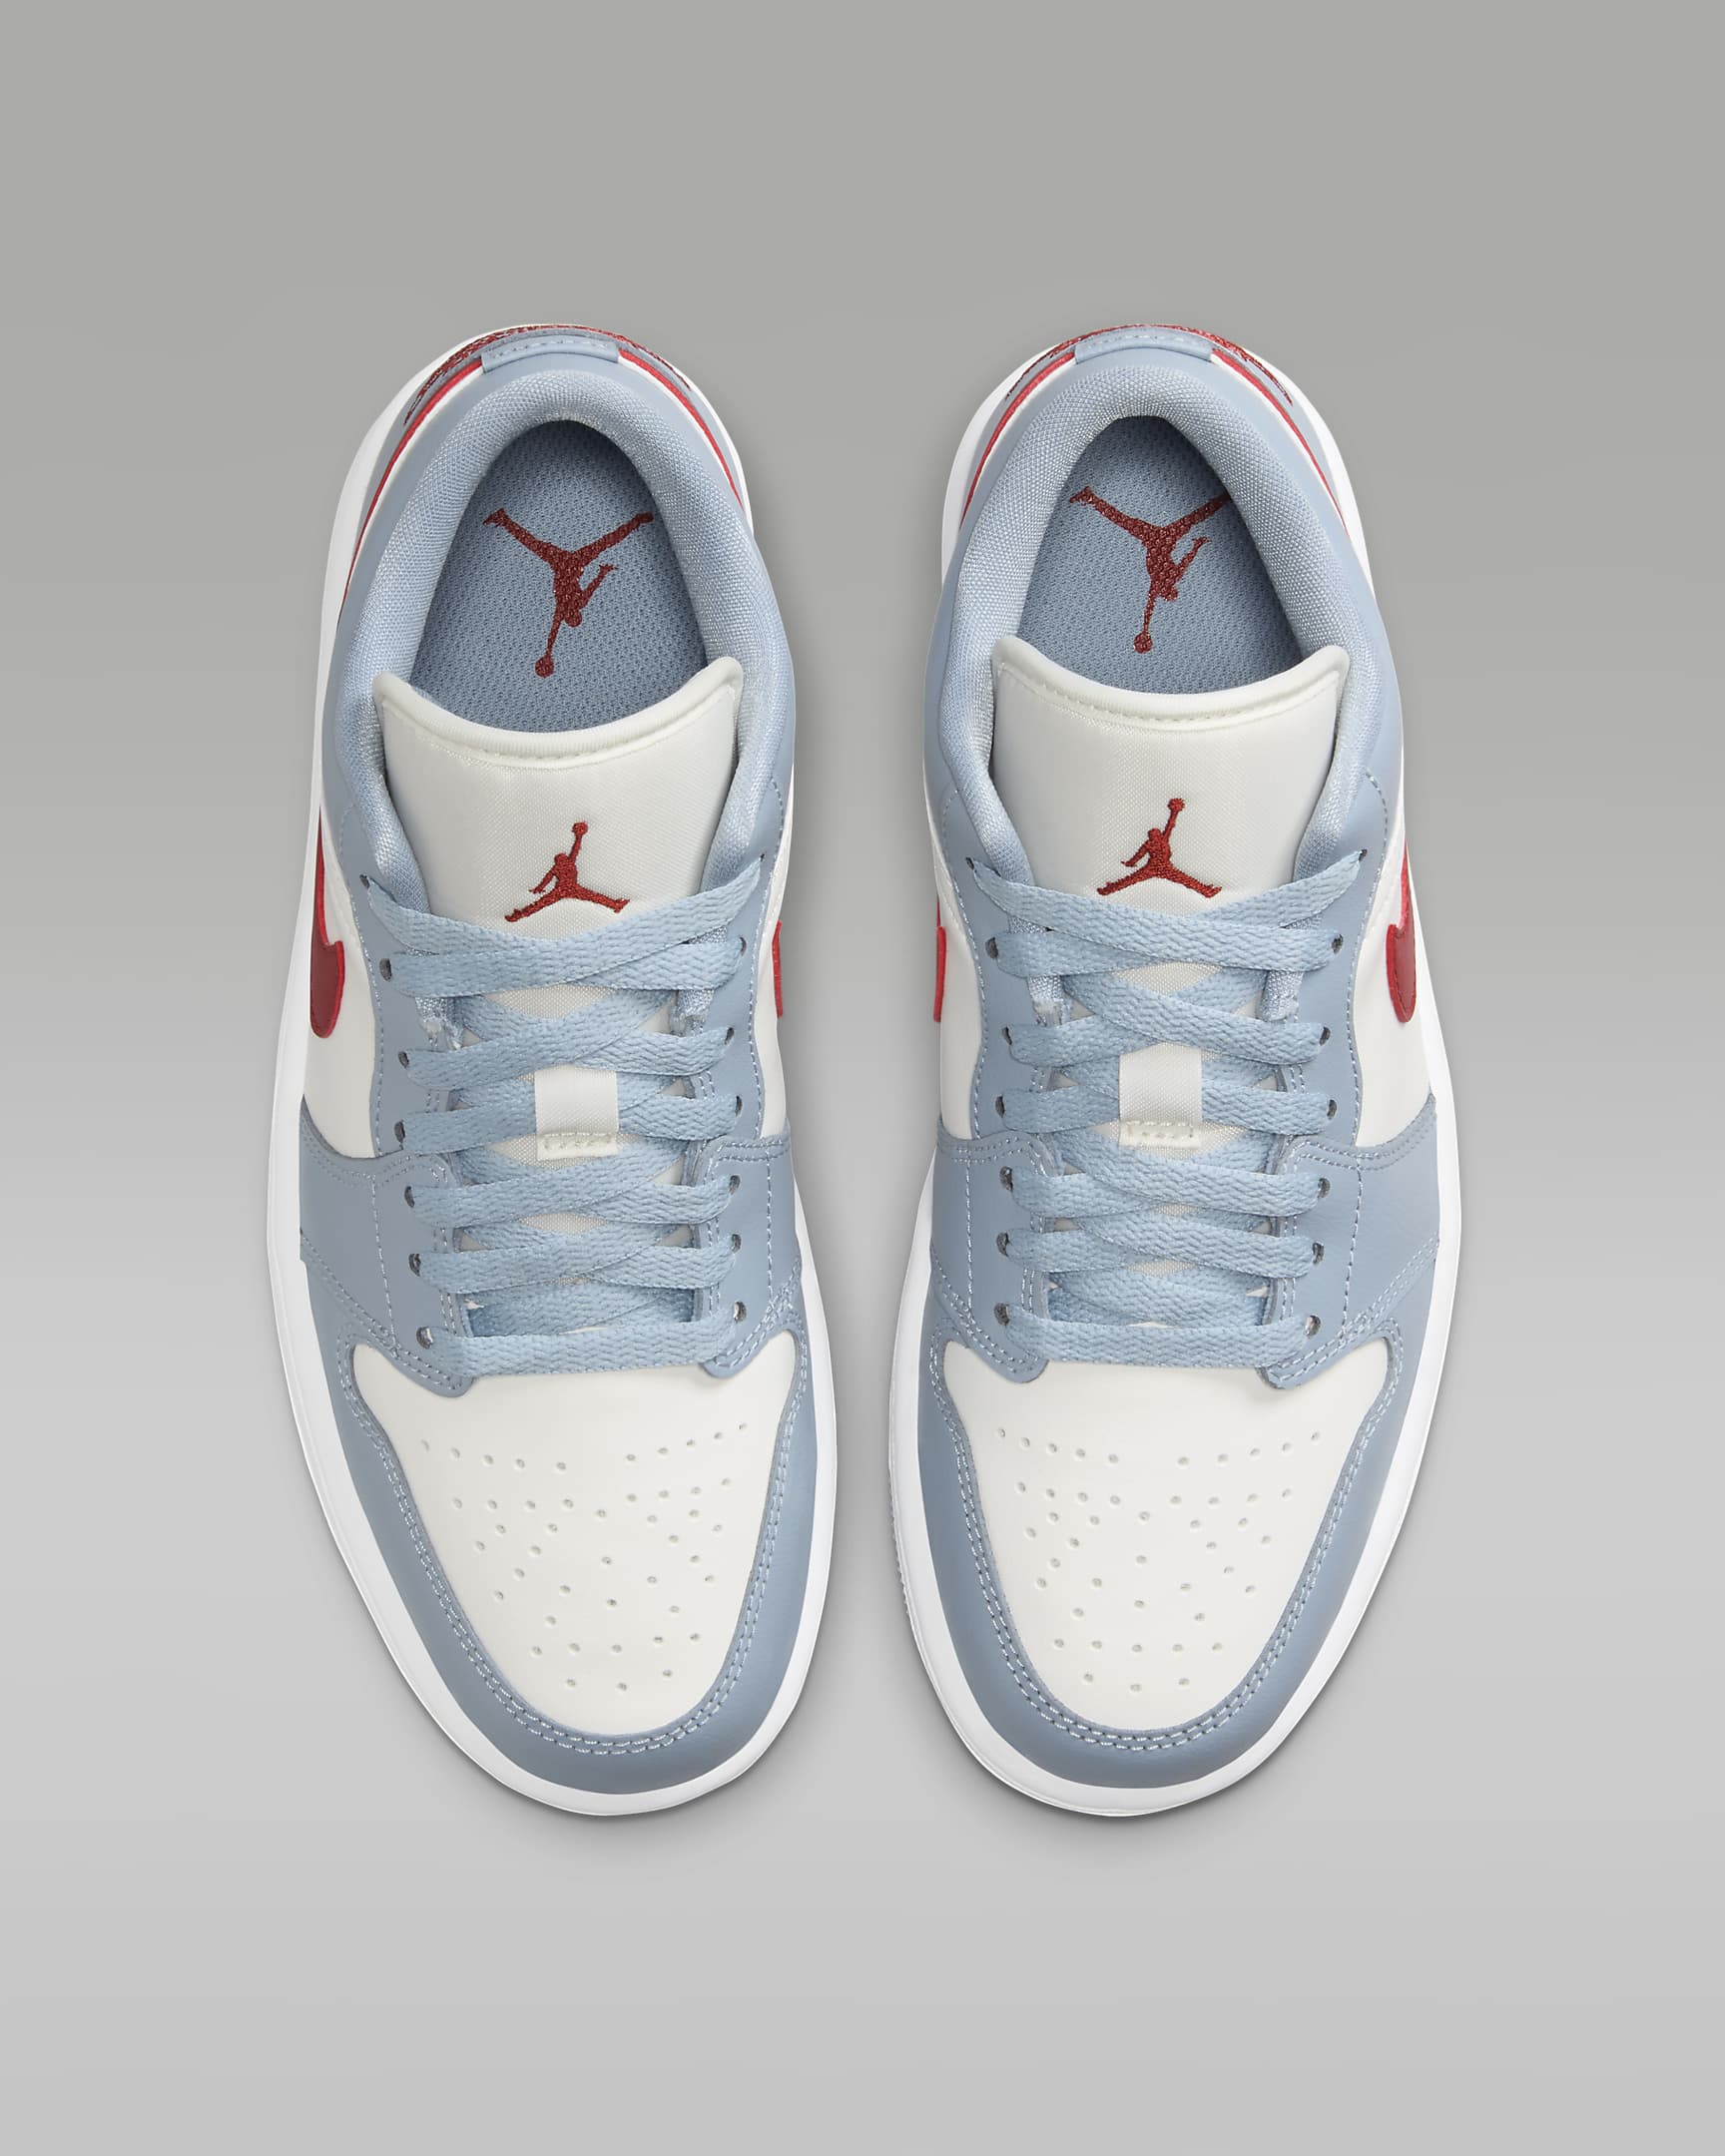 Air Jordan 1 Low Women's Shoes - Sail/Blue Grey/White/Dune Red